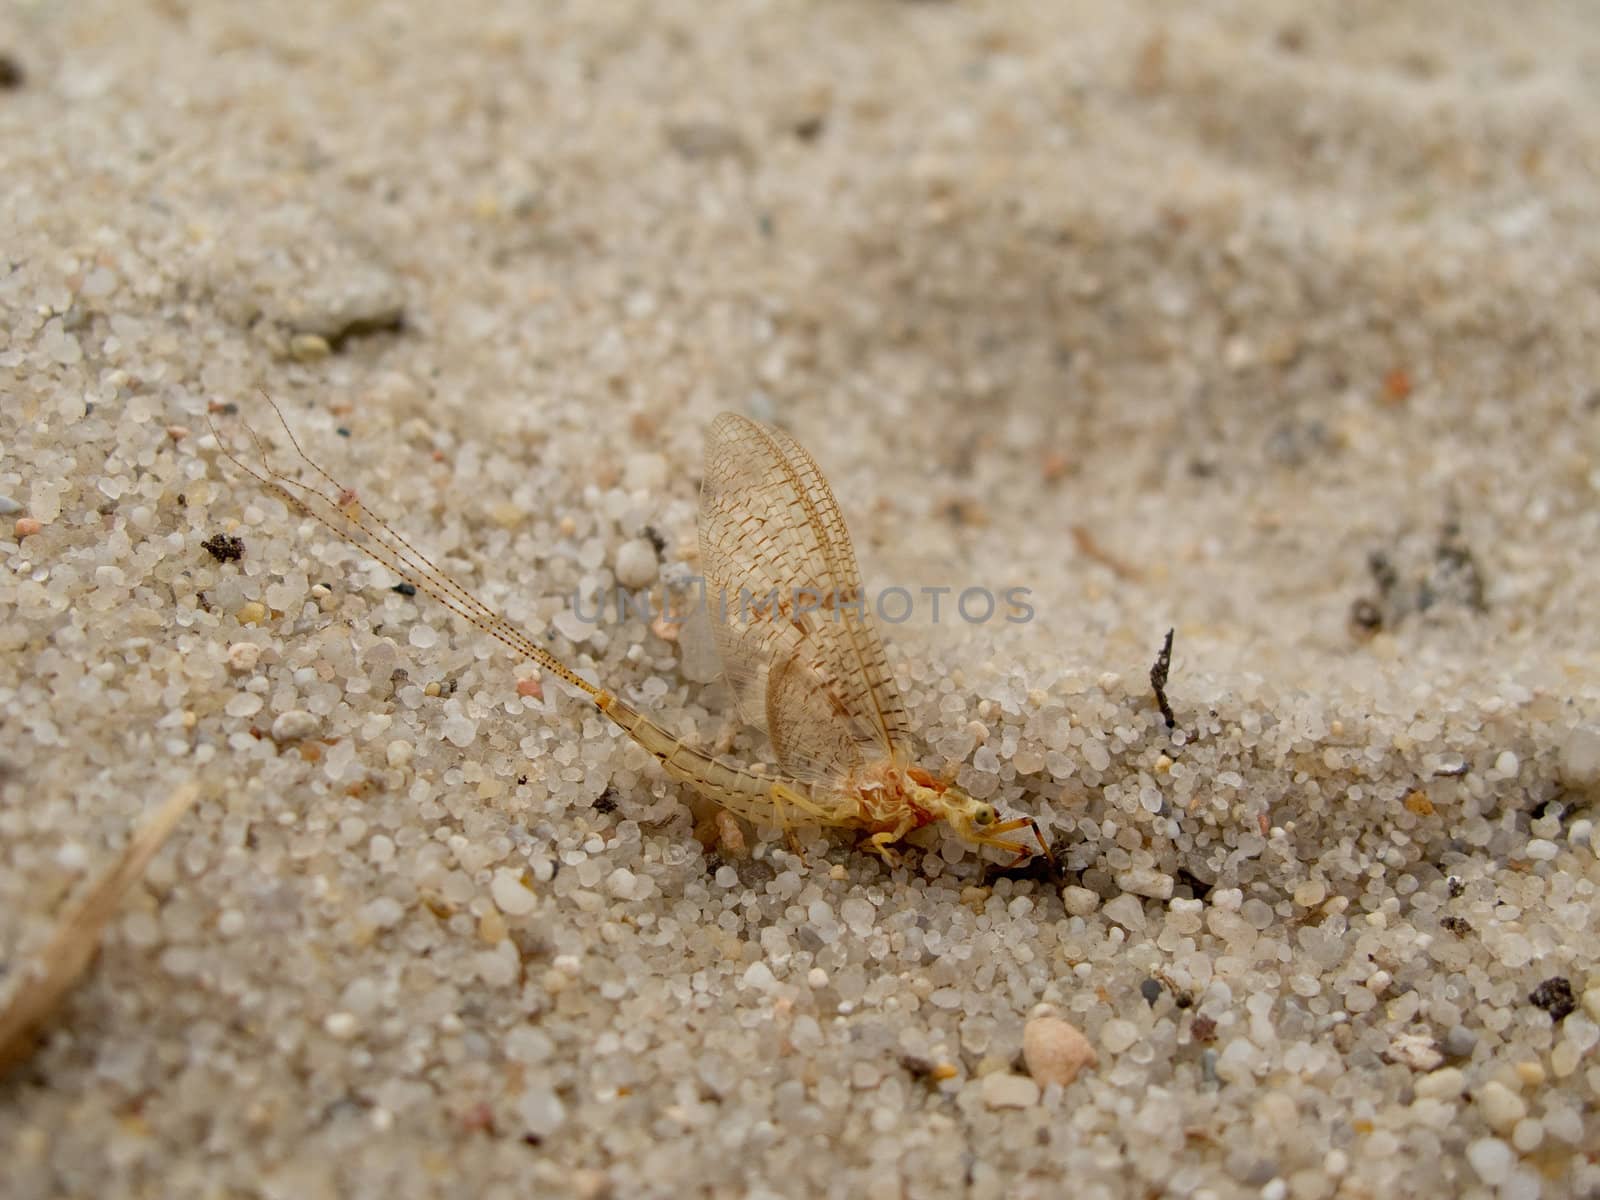 Male of an adult mayfly, Ephemera vulgata, sitting on sand